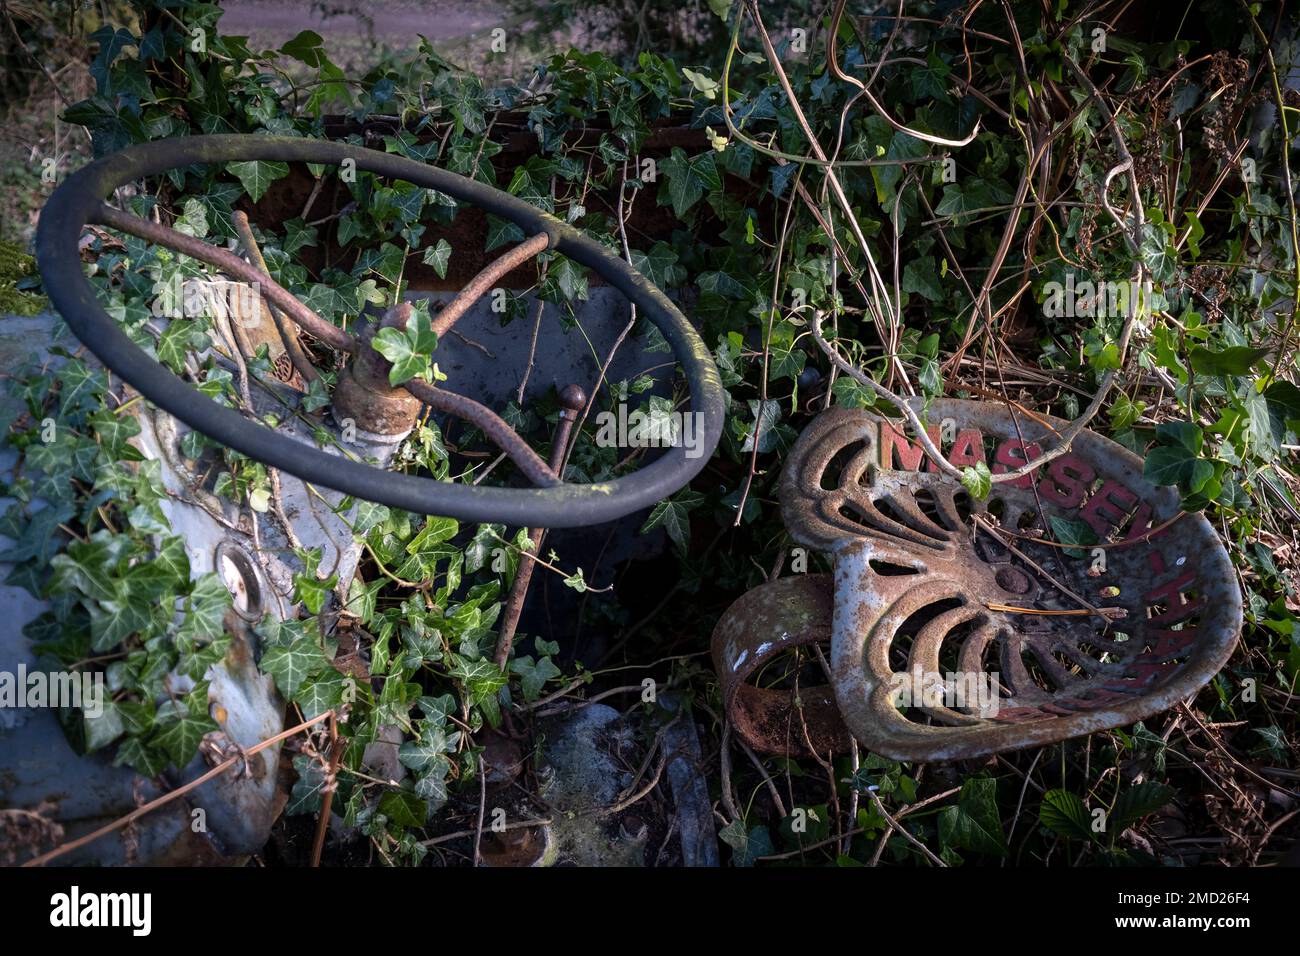 Cab Detail, Abandoned Massey Harris Tractor Overgrown with Vegetation, Peckforton, Cheshire, England, UK Stock Photo